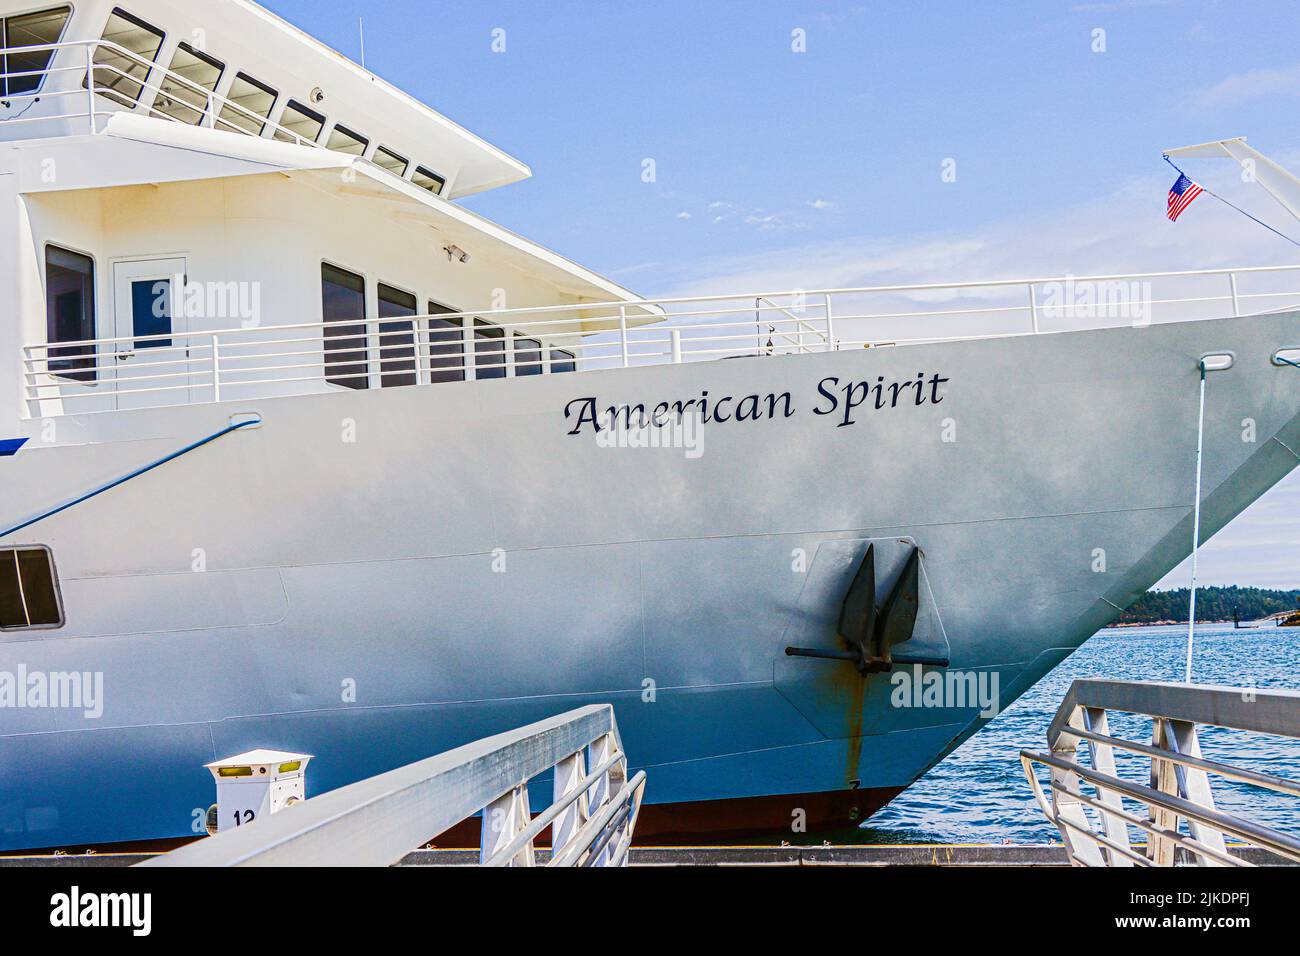 American Spirit, a ship of the American Cruise Lines, docked at San Juan Island, Washington State. Stock Photo